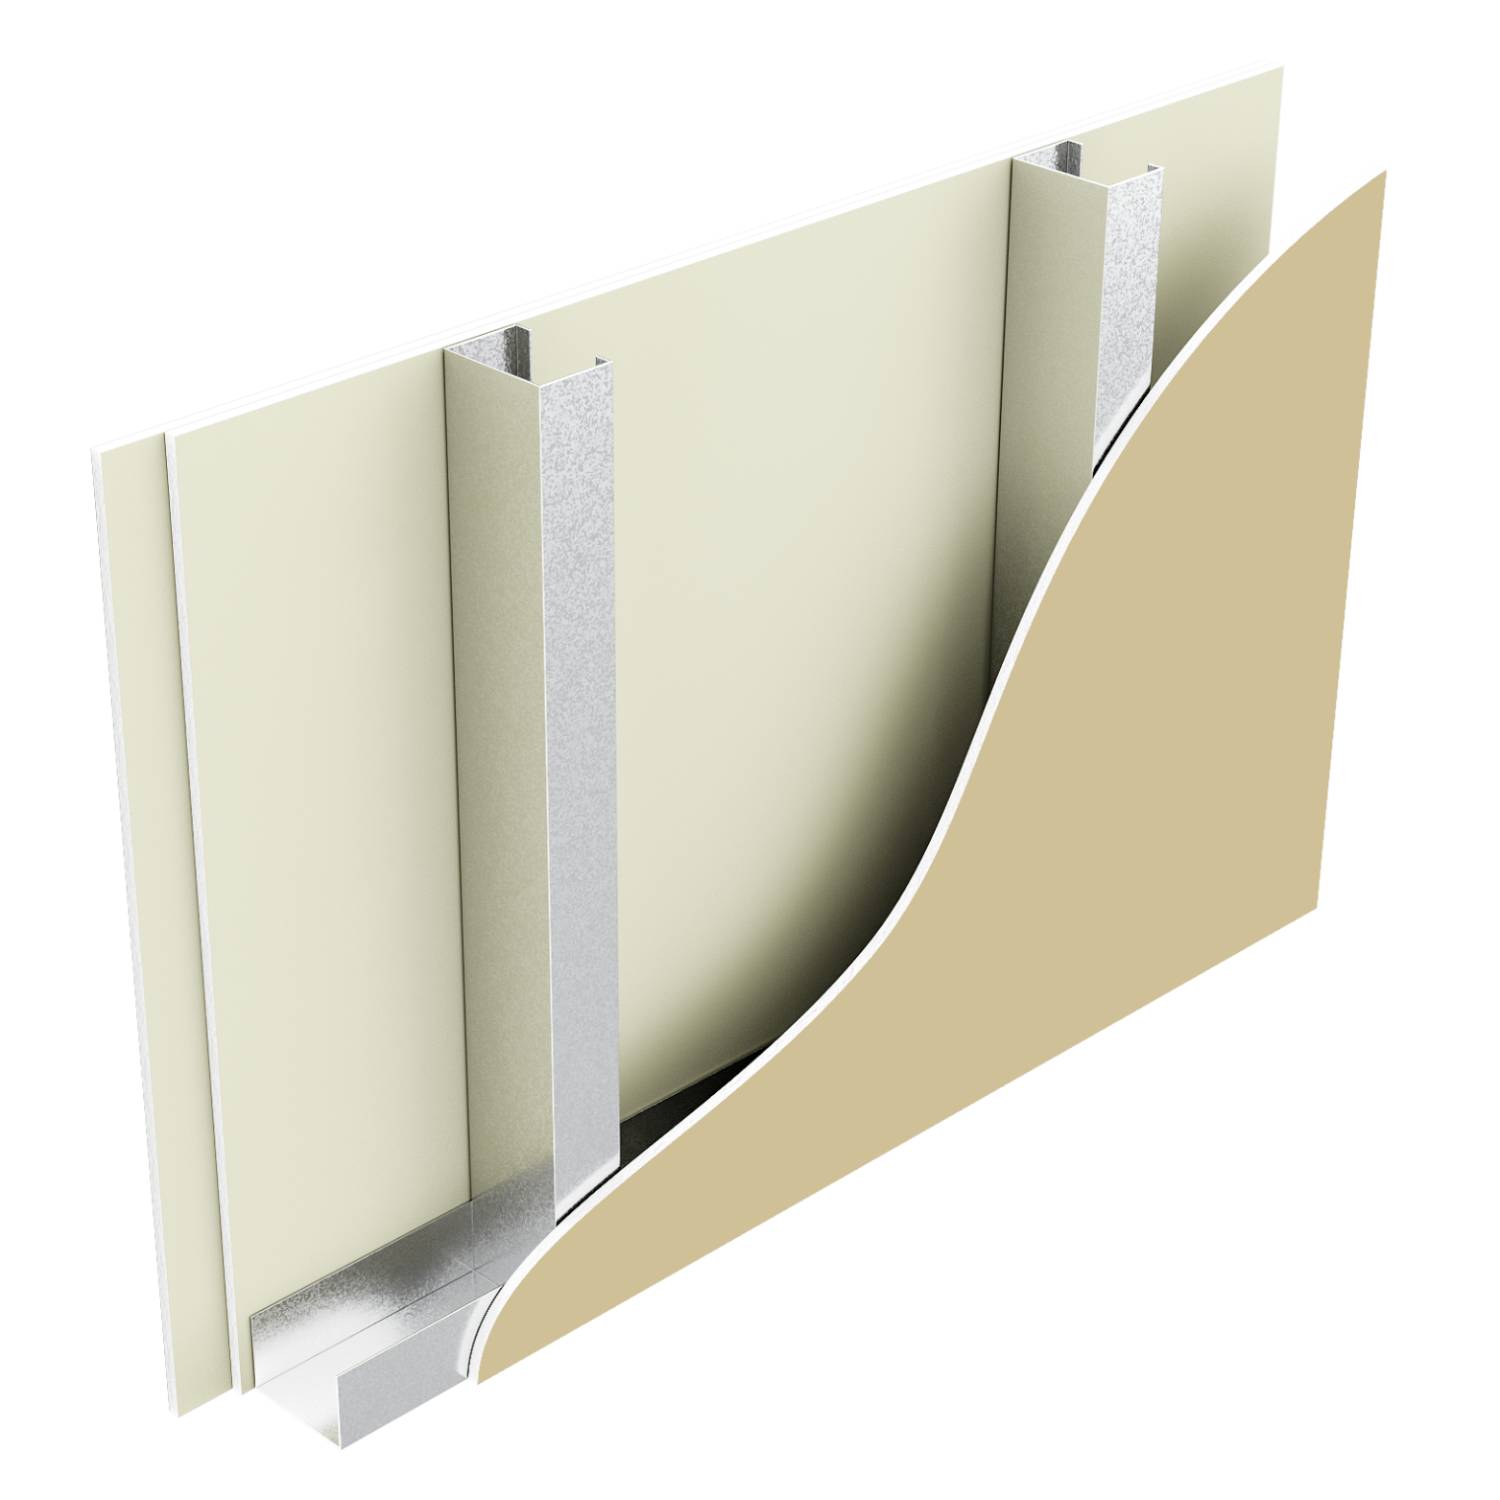 Metsec SFS Infill Wall with Y-Wall Sheathing Board, 12.5 mm Knauf Internal Boards, Fire performance 120 min (non boundary)